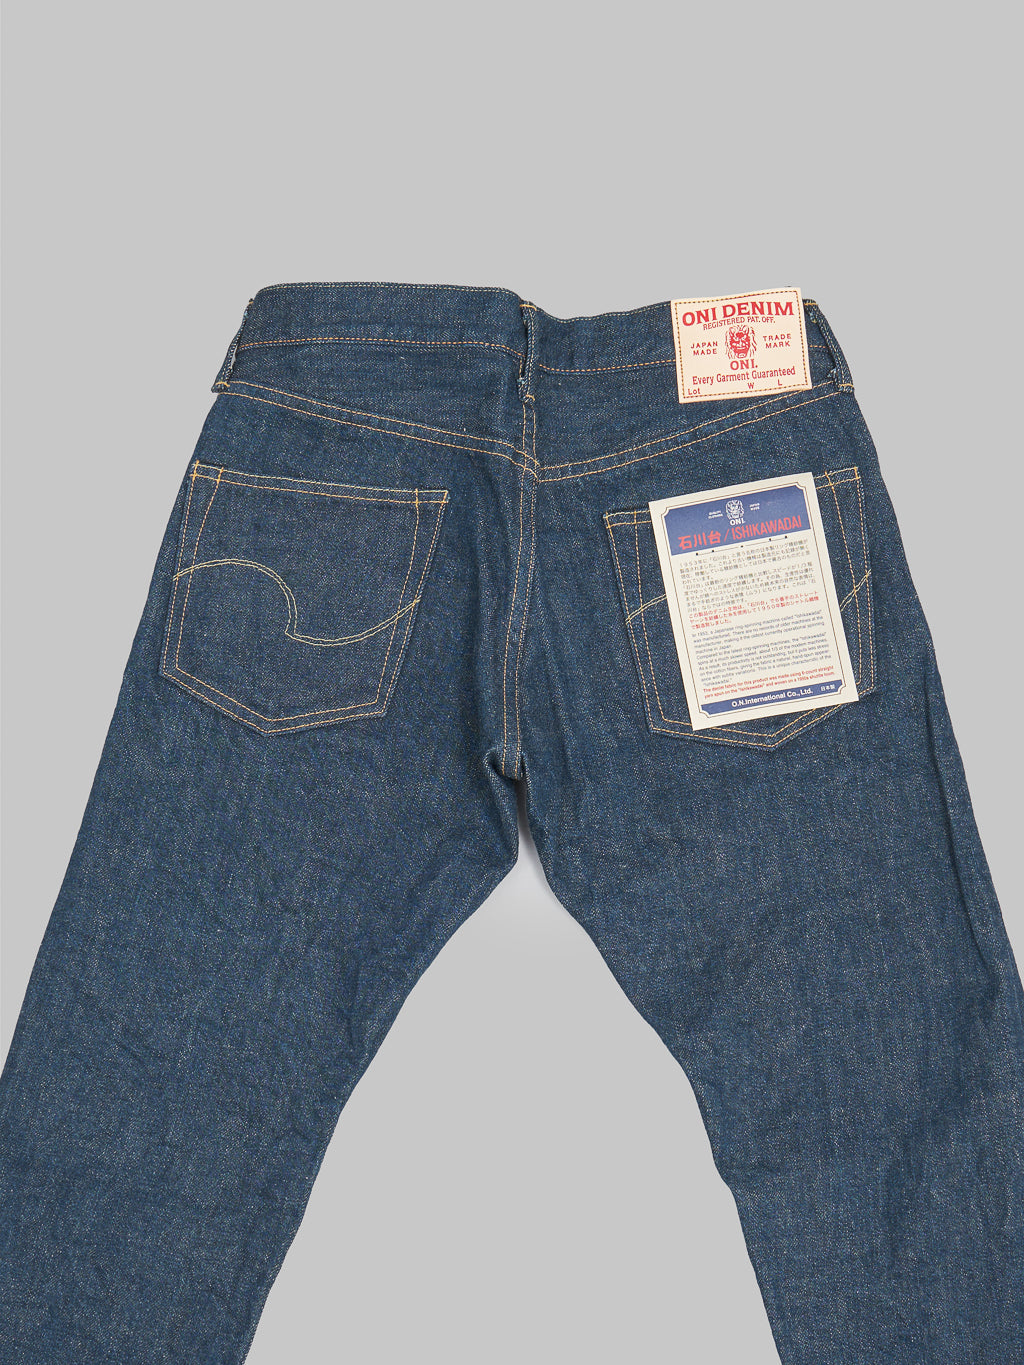 ONI Denim 622 Ishikawadai 15oz Relaxed Tapered Jeans back details